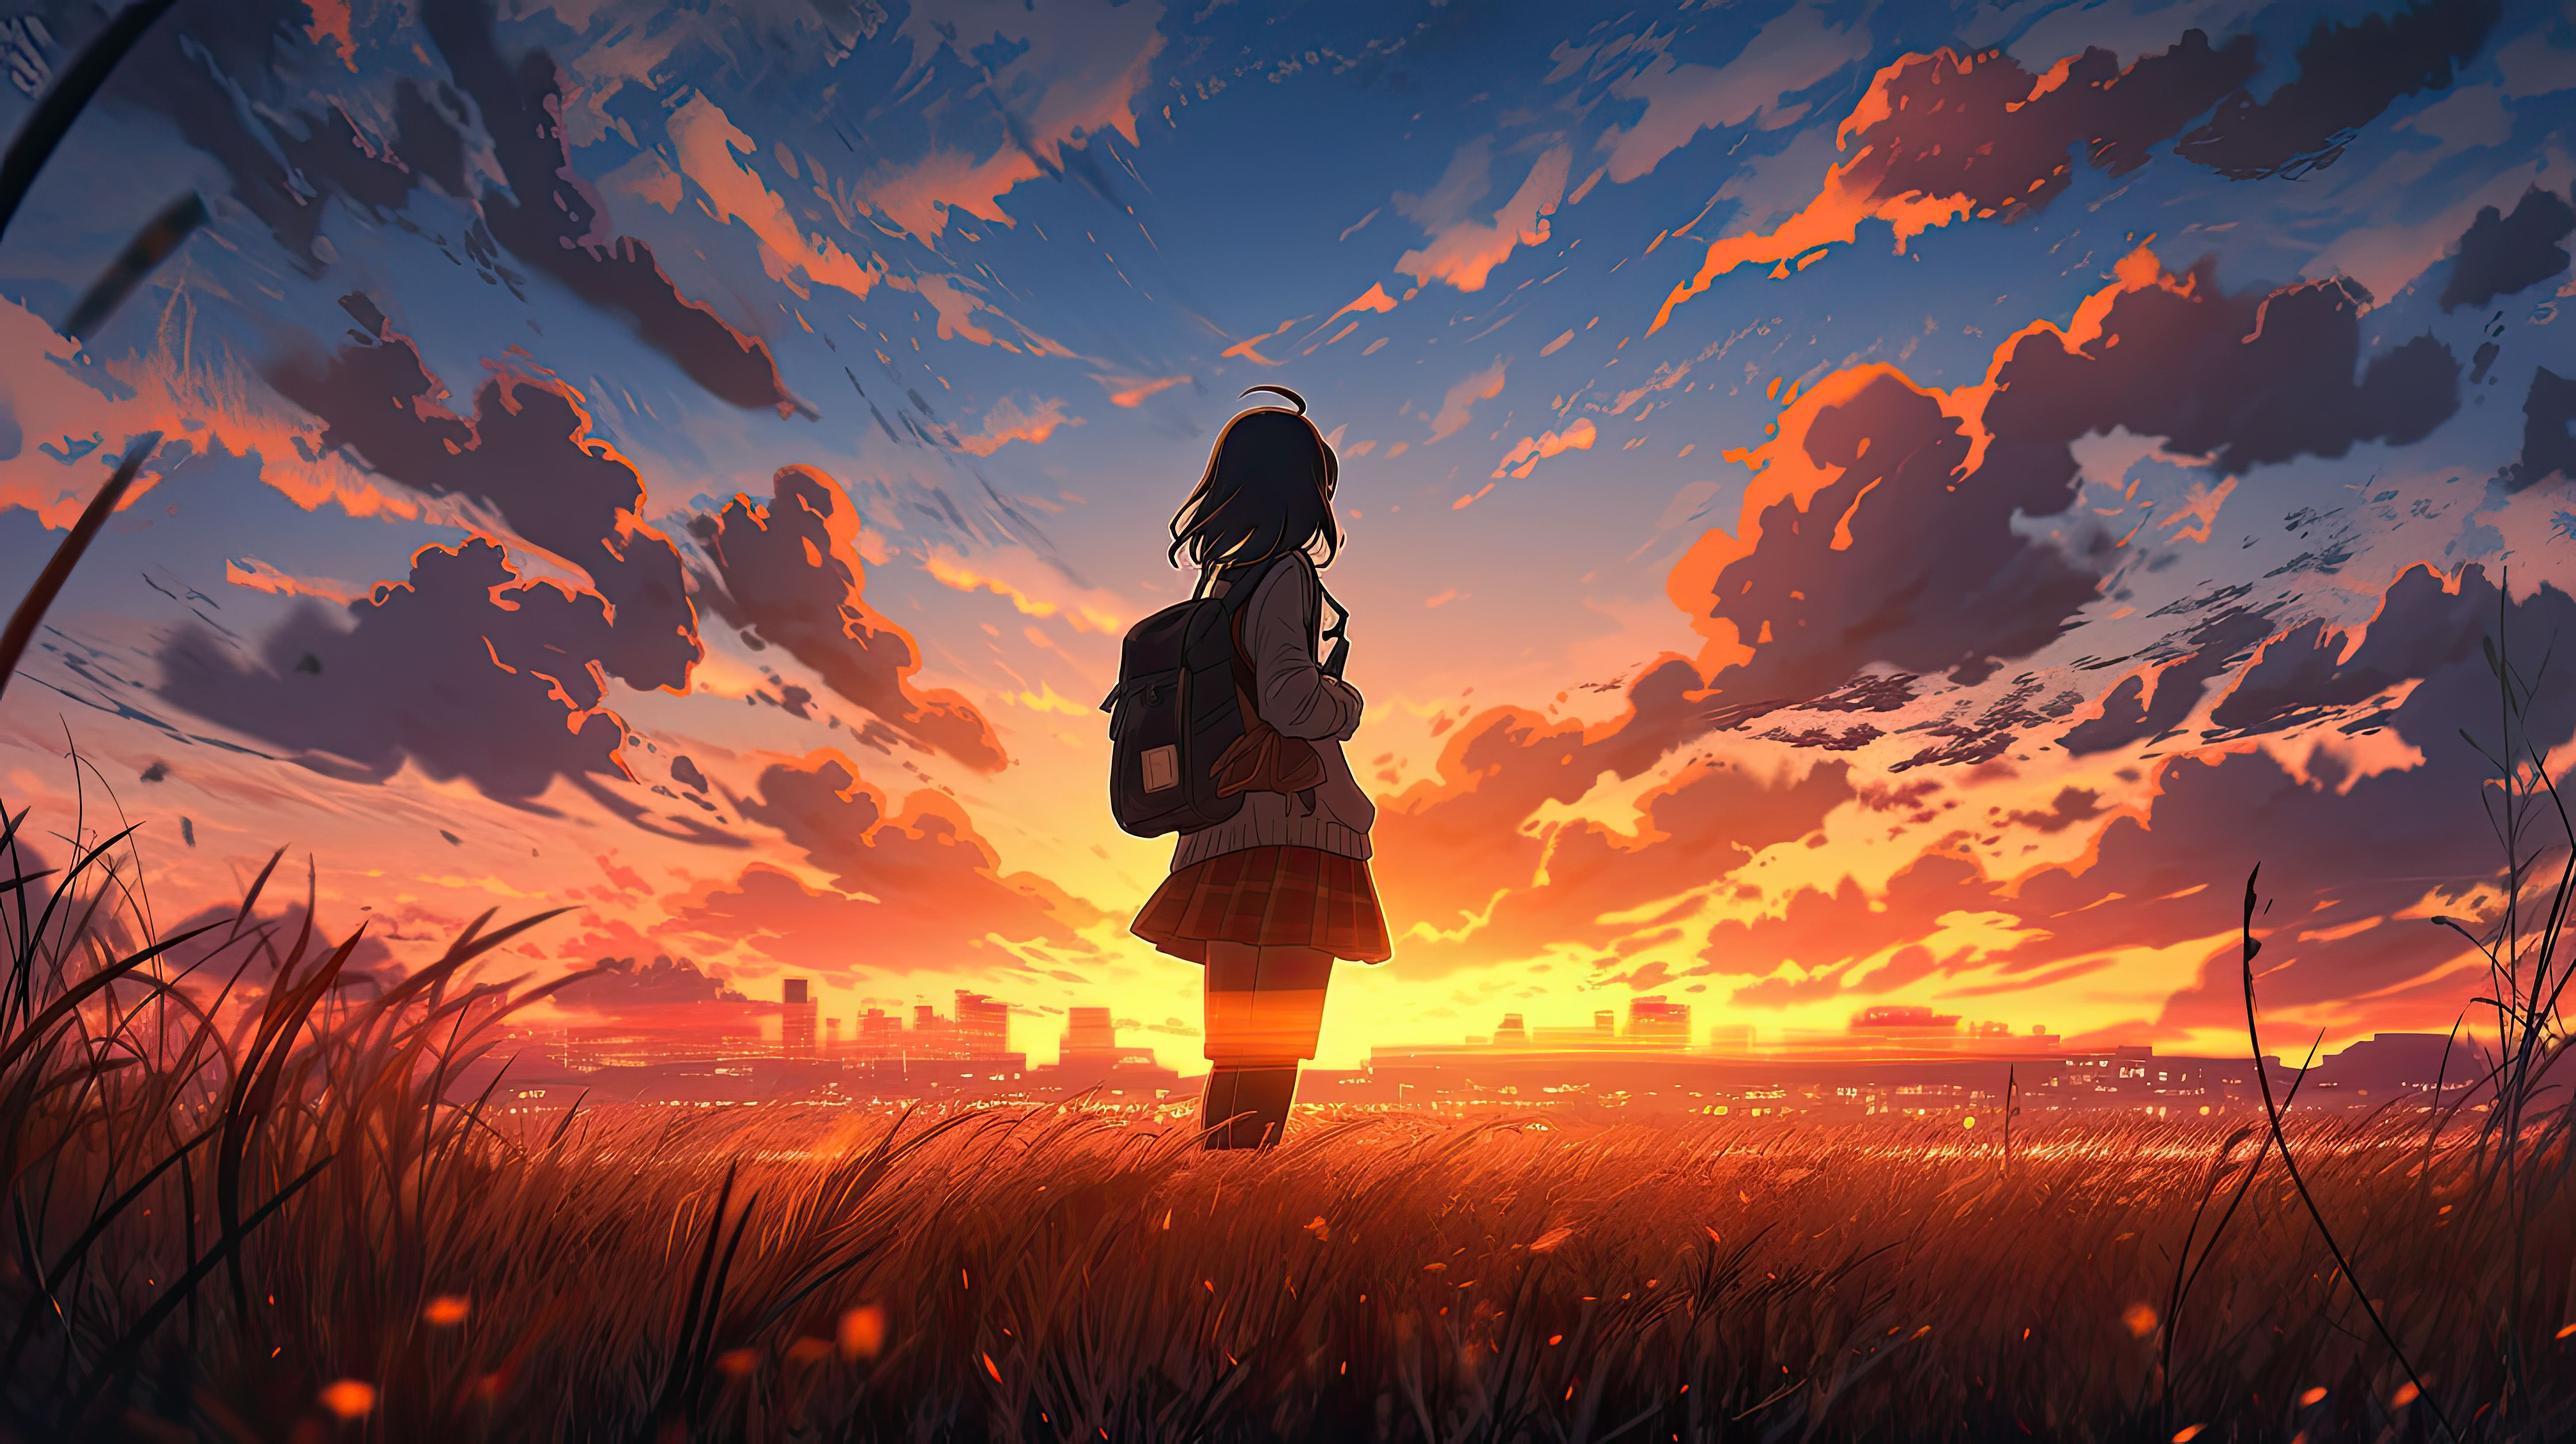 Anime Pc wallpaper by Eclipsewideedit on DeviantArt